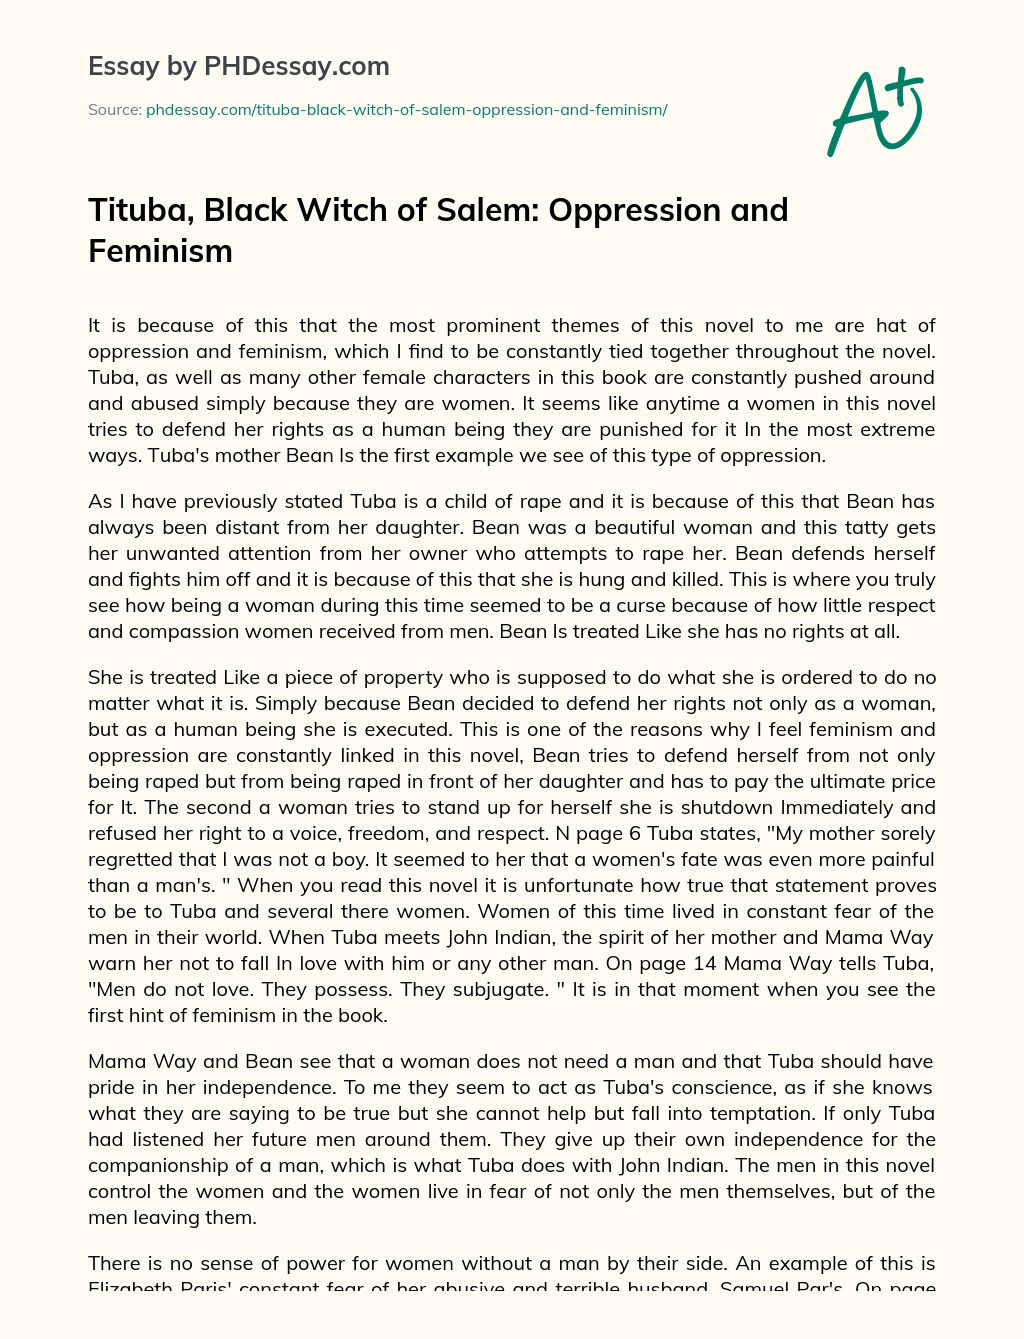 Tituba, Black Witch of Salem: Oppression and Feminism essay